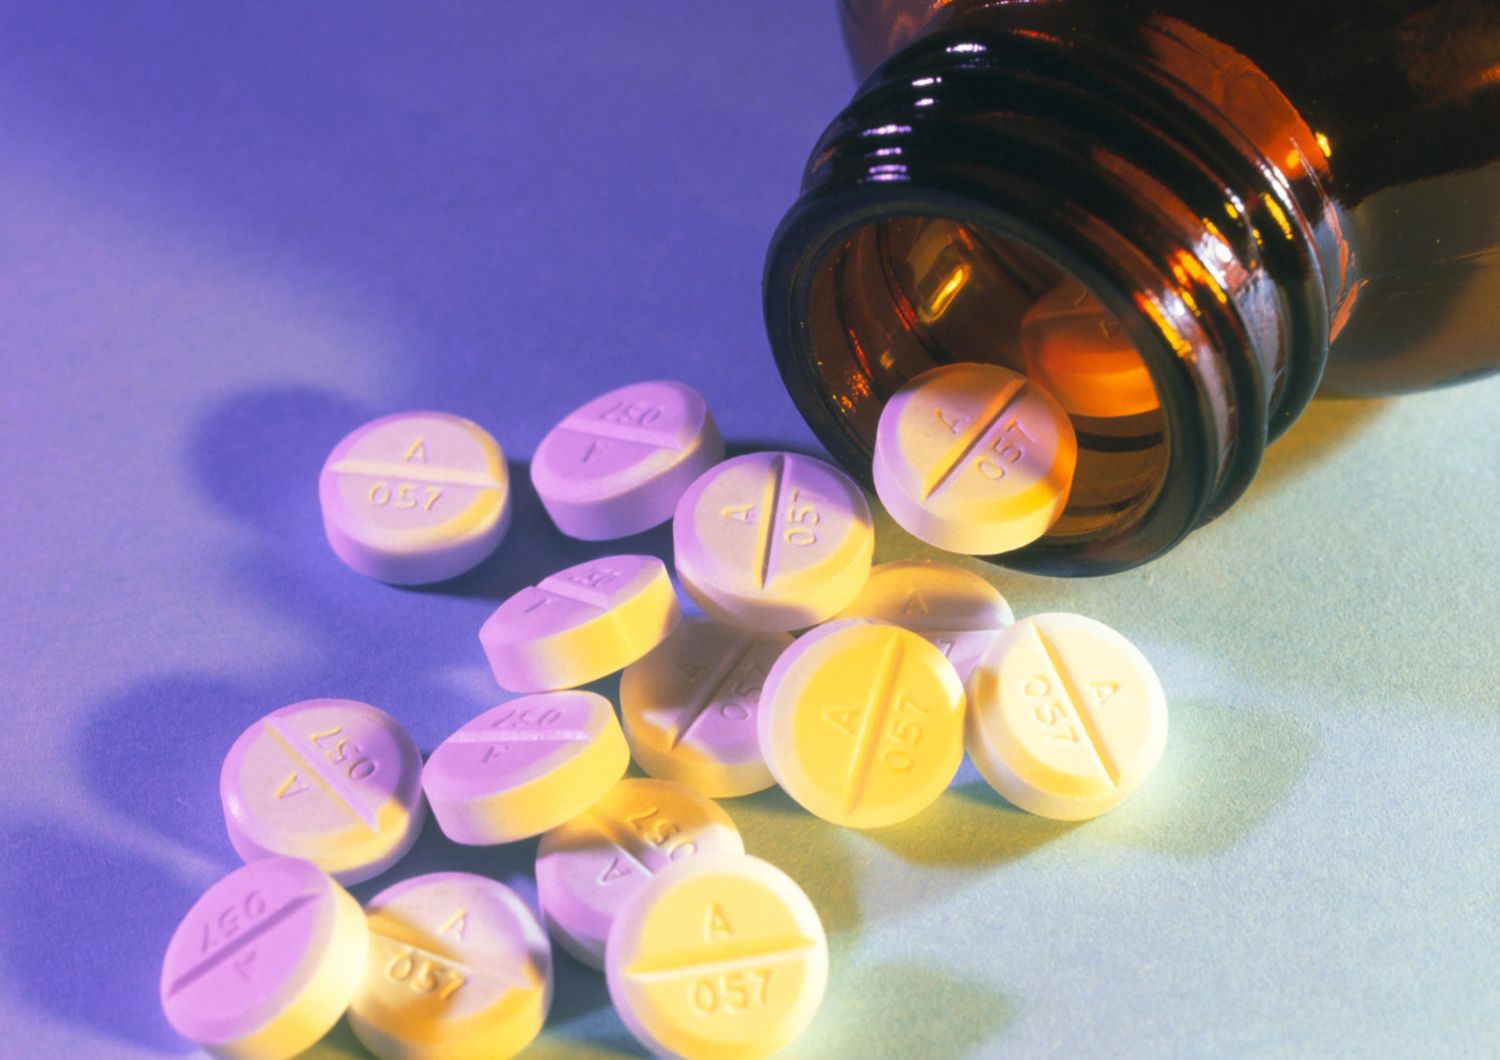 antibiotico farmaci farmaco pillole (Agf)